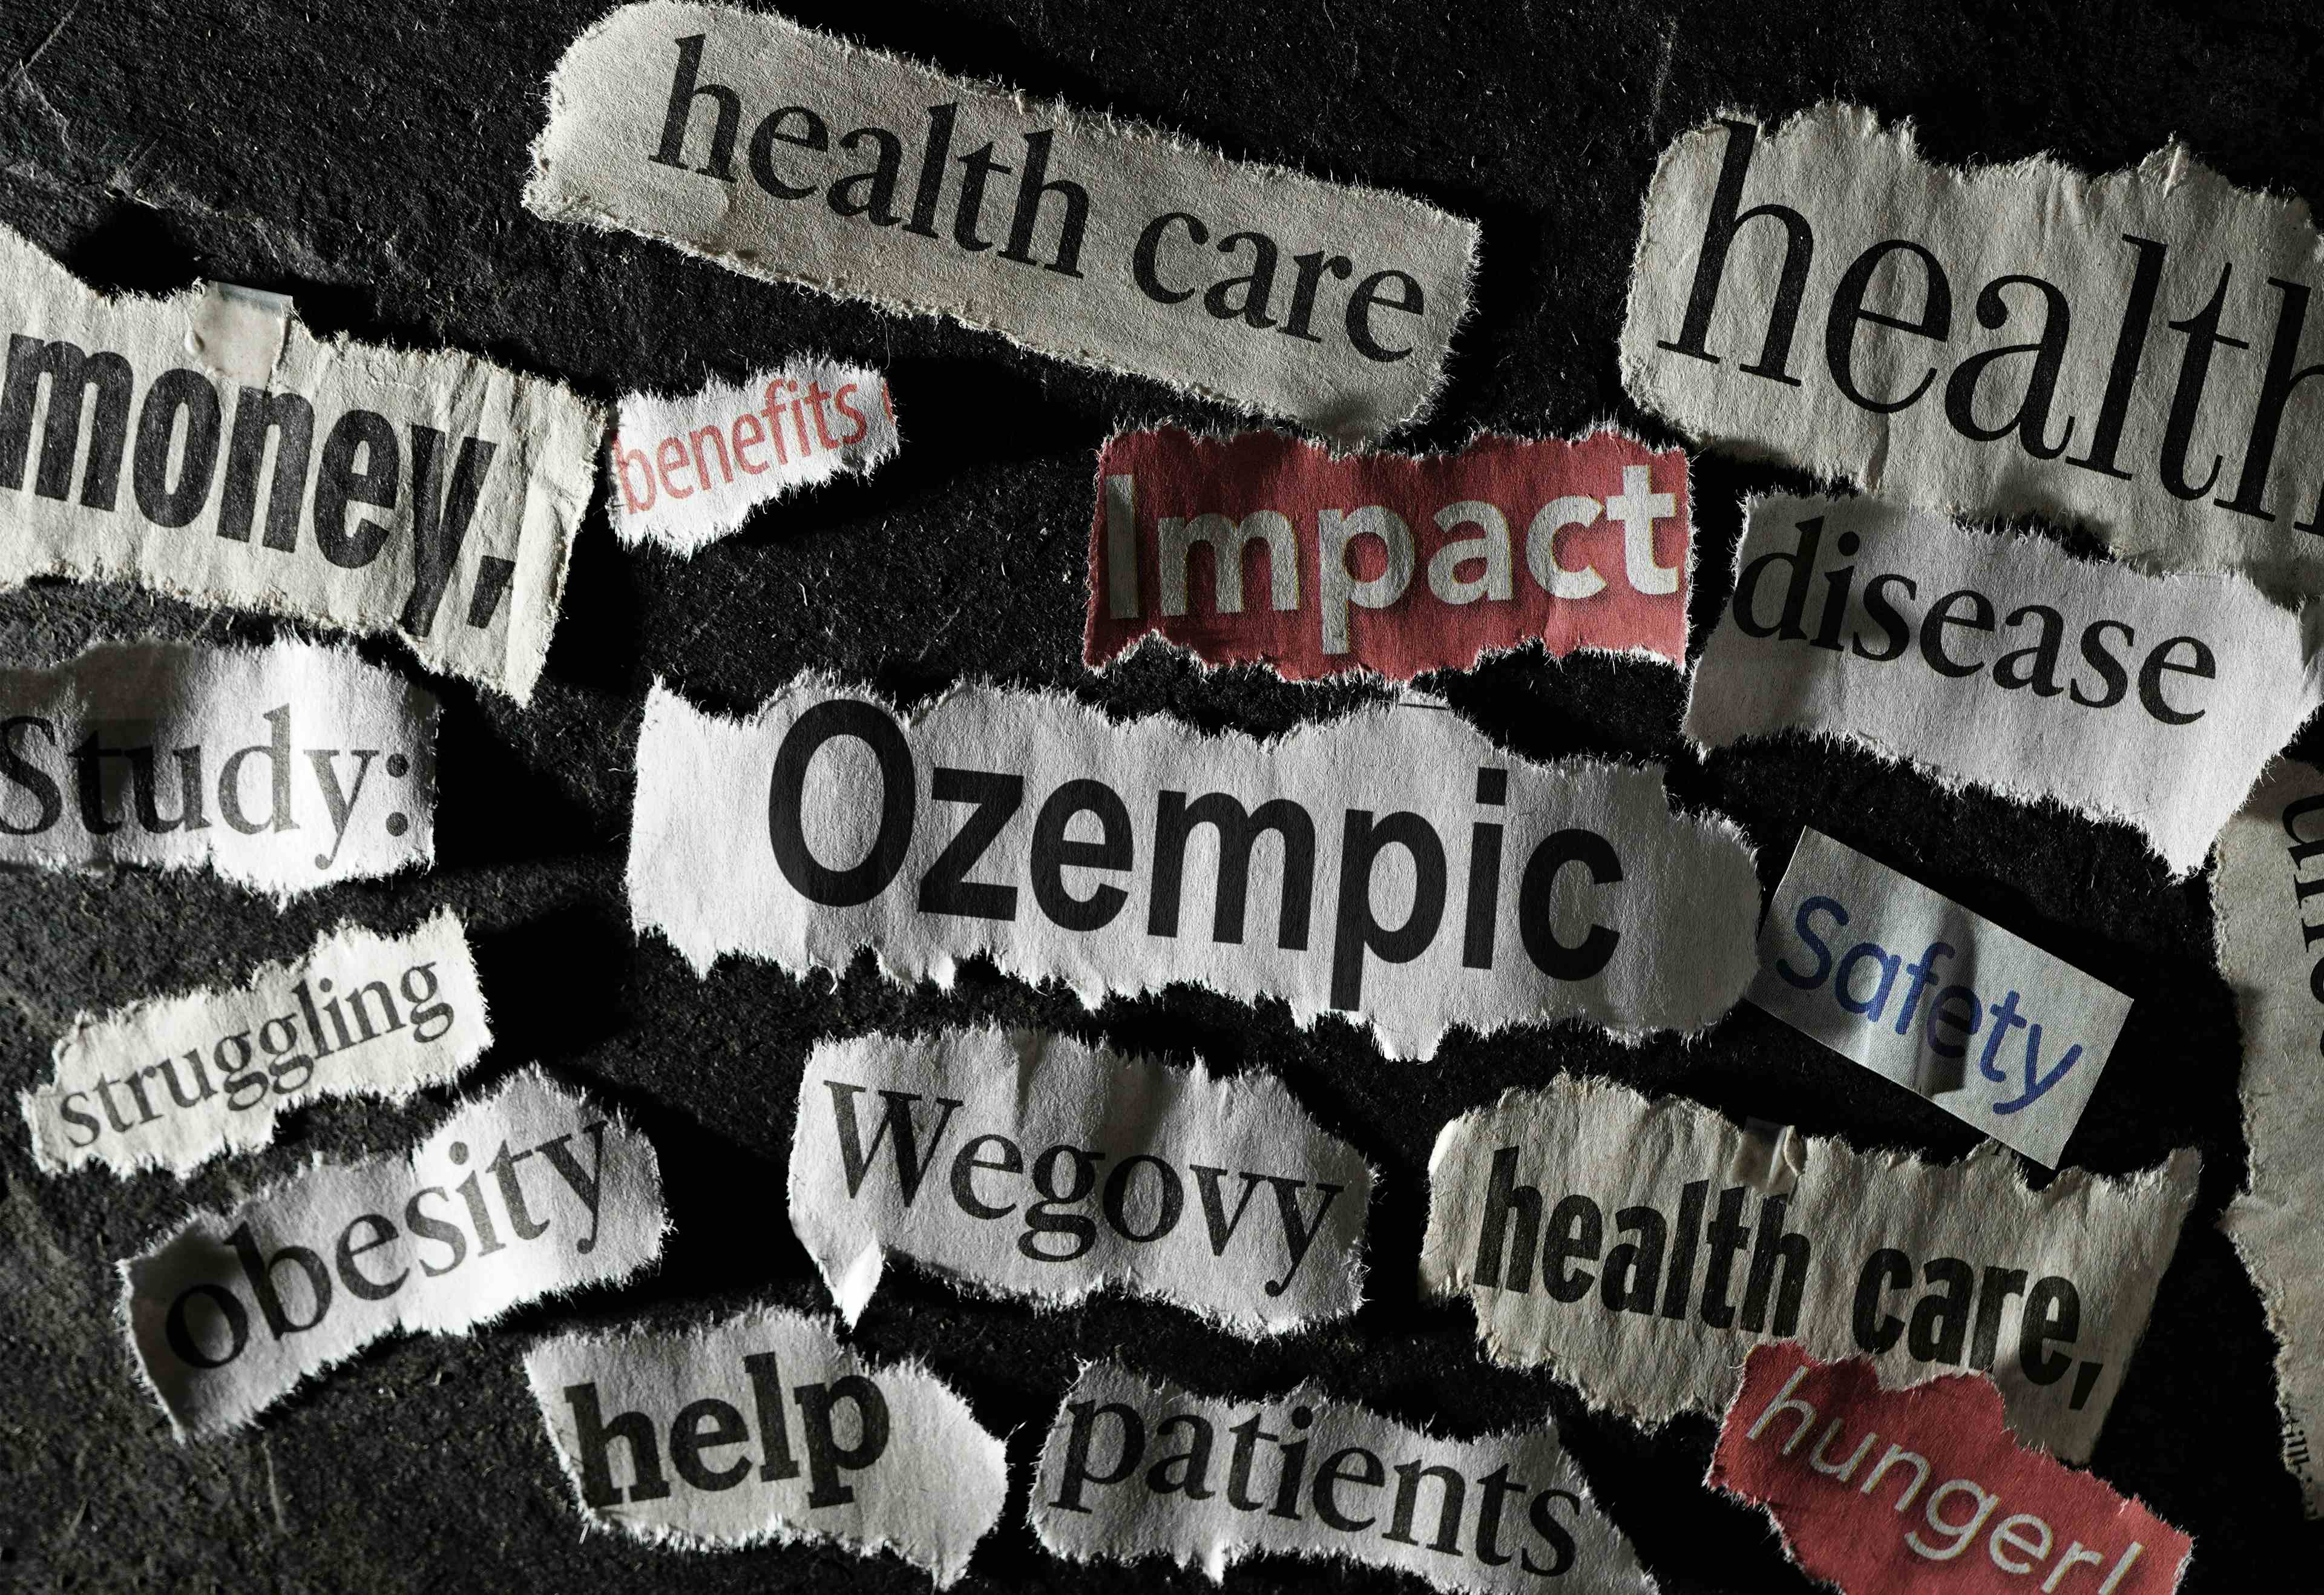 Ozempic, obesity, drug shortage, media portrayal | Image Credit: zimmytws - stock.adobe.com